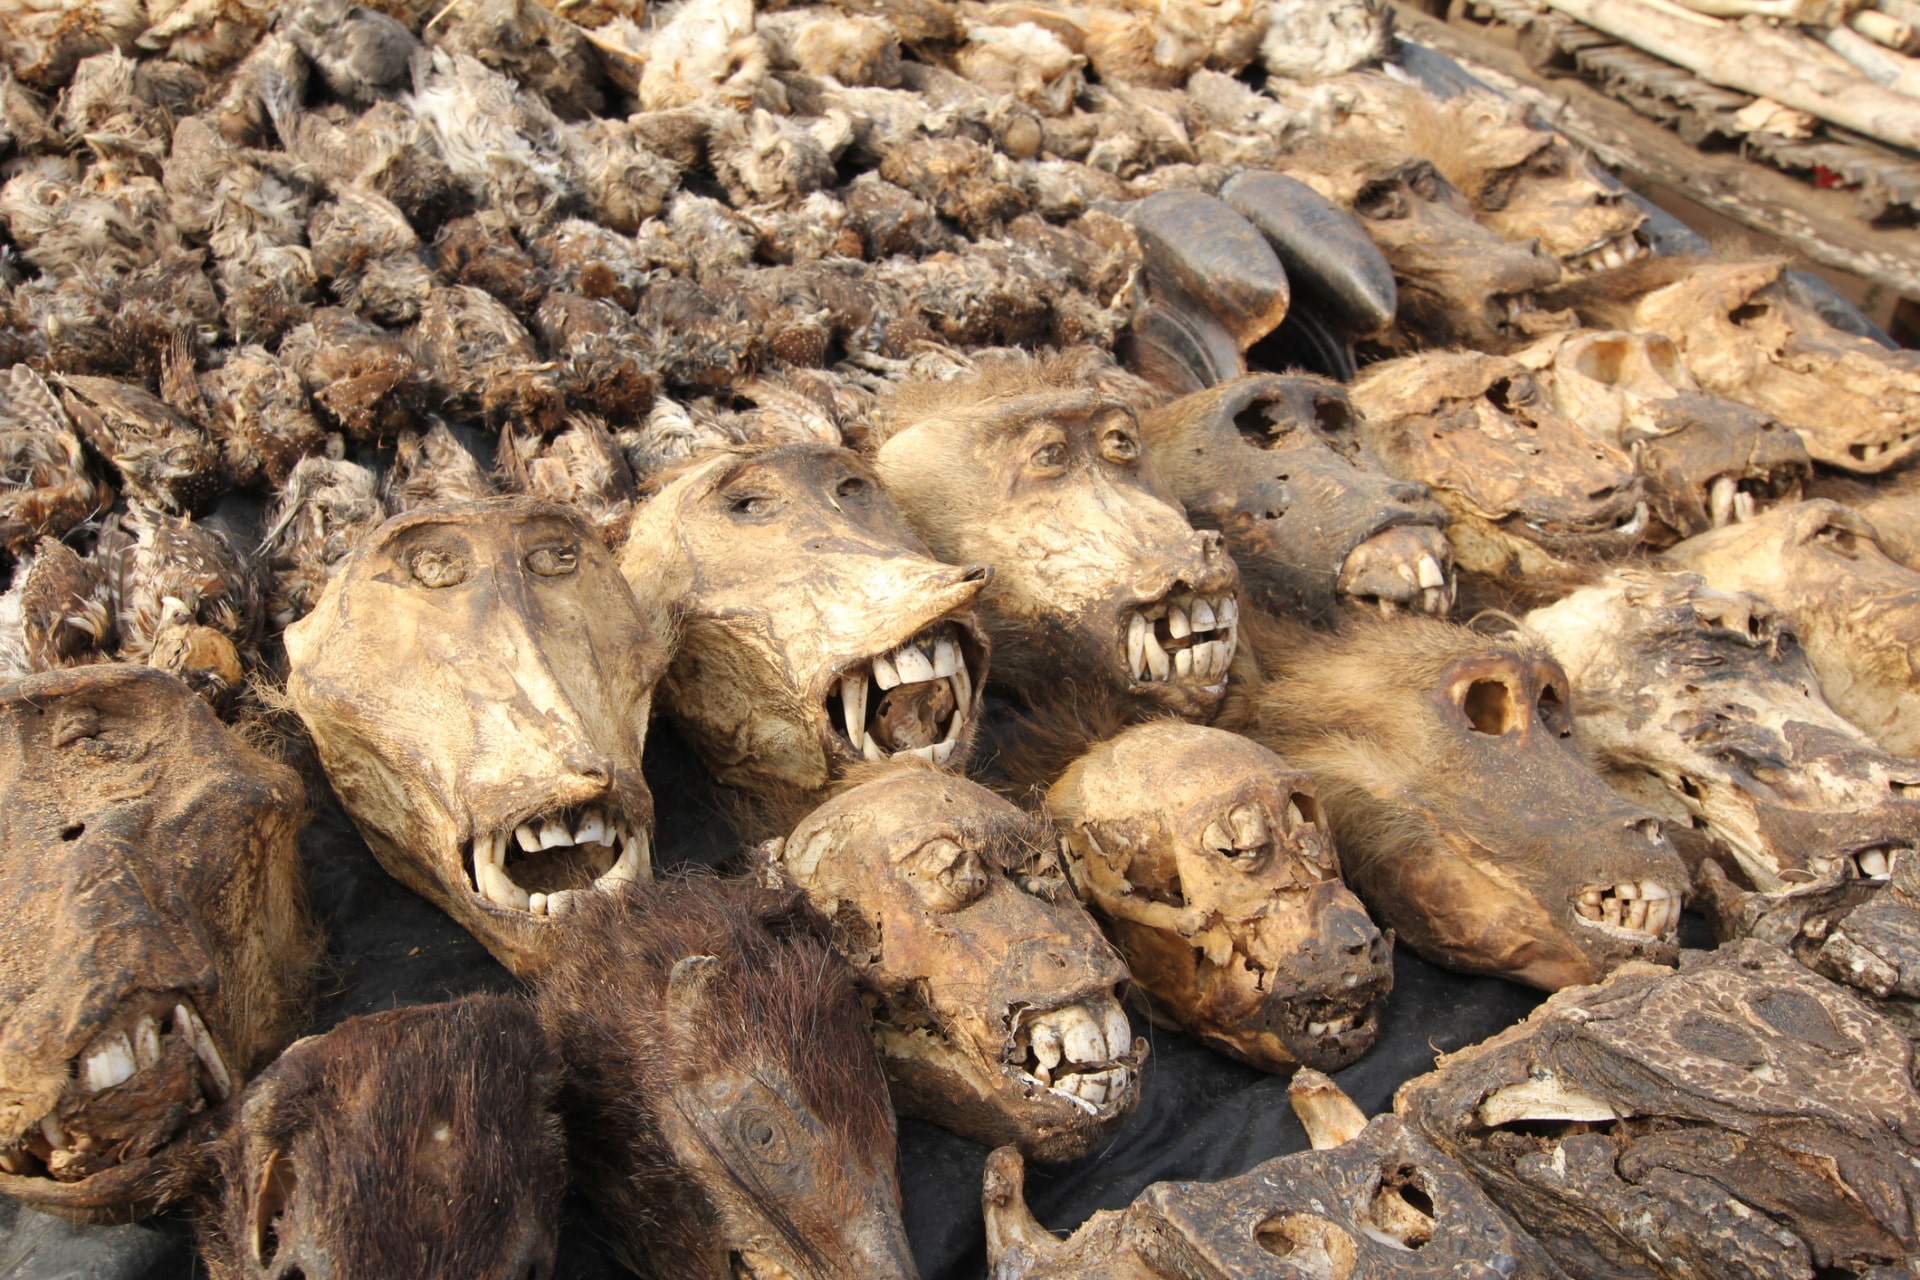 Monkey Heads at Akodessewa Voodoo or Fetish Market, West Africa